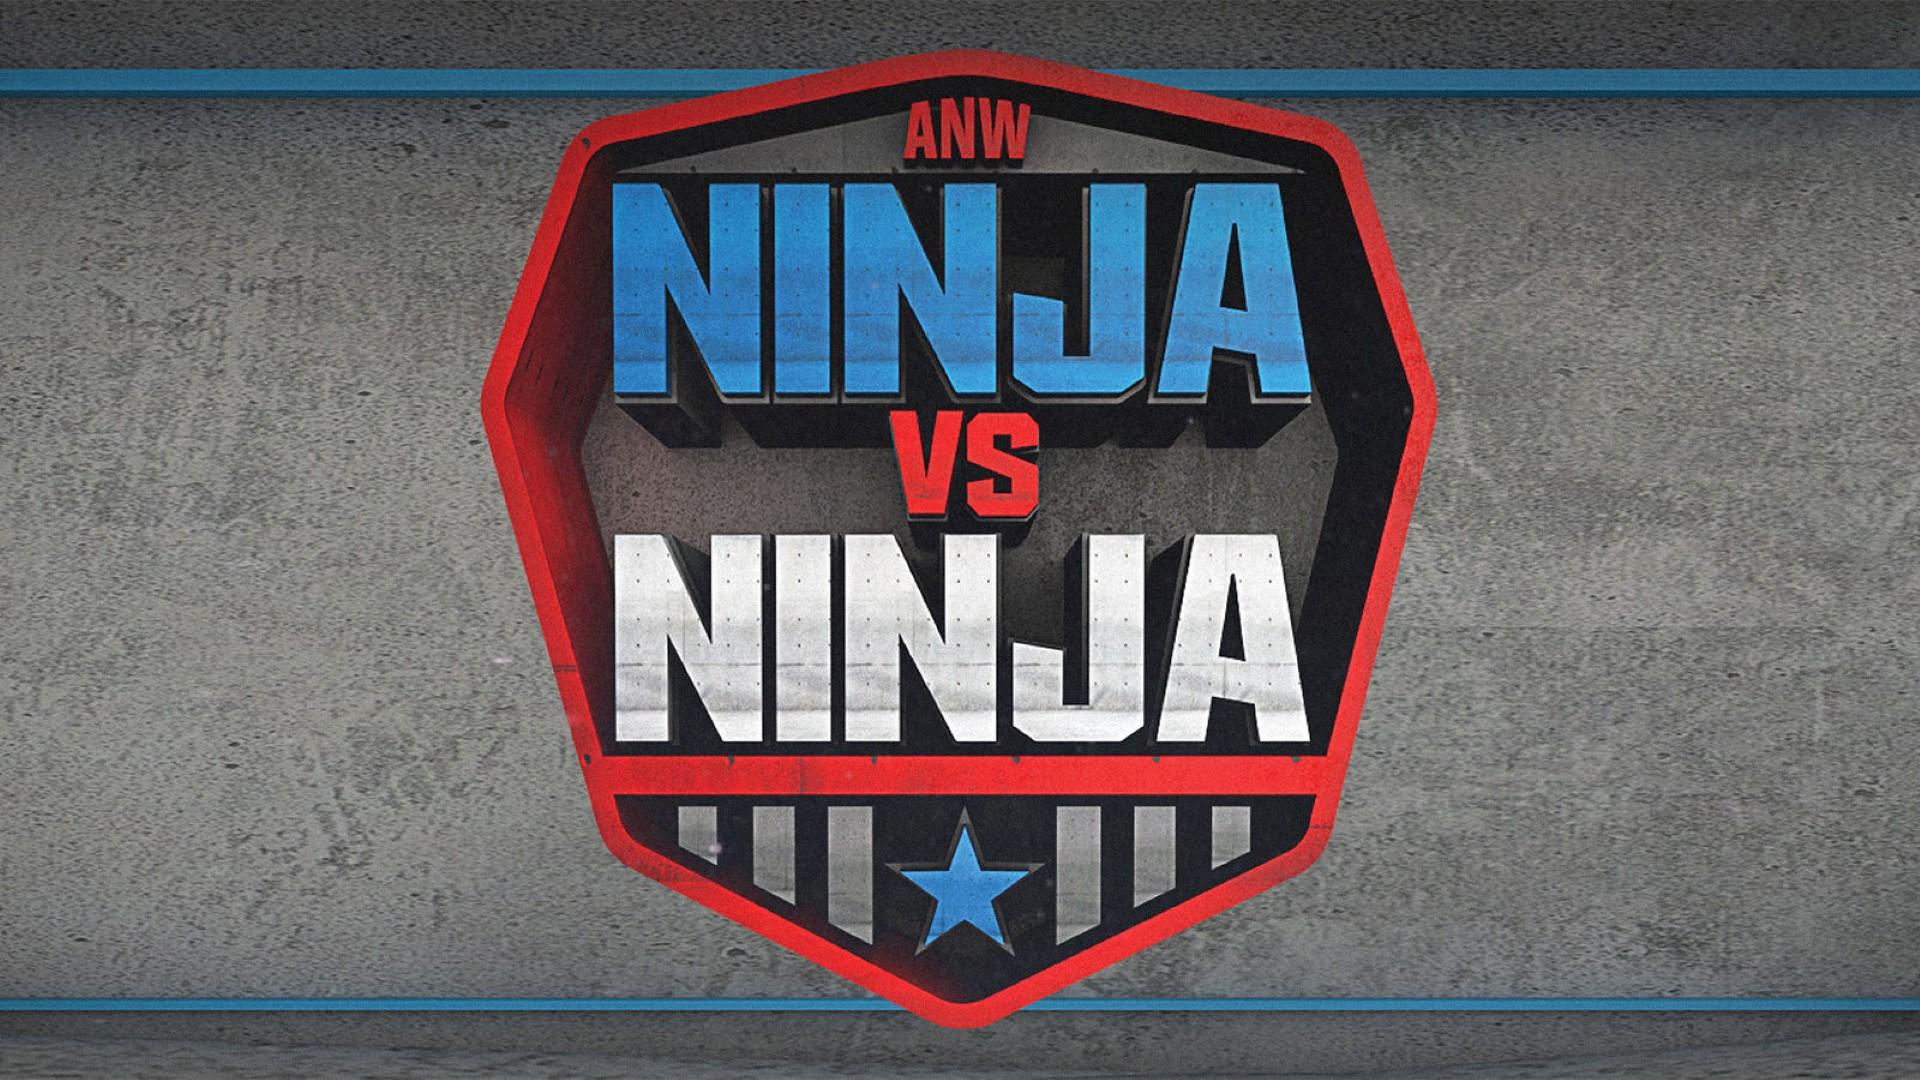 American Ninja Warrior: Ninja vs Ninja